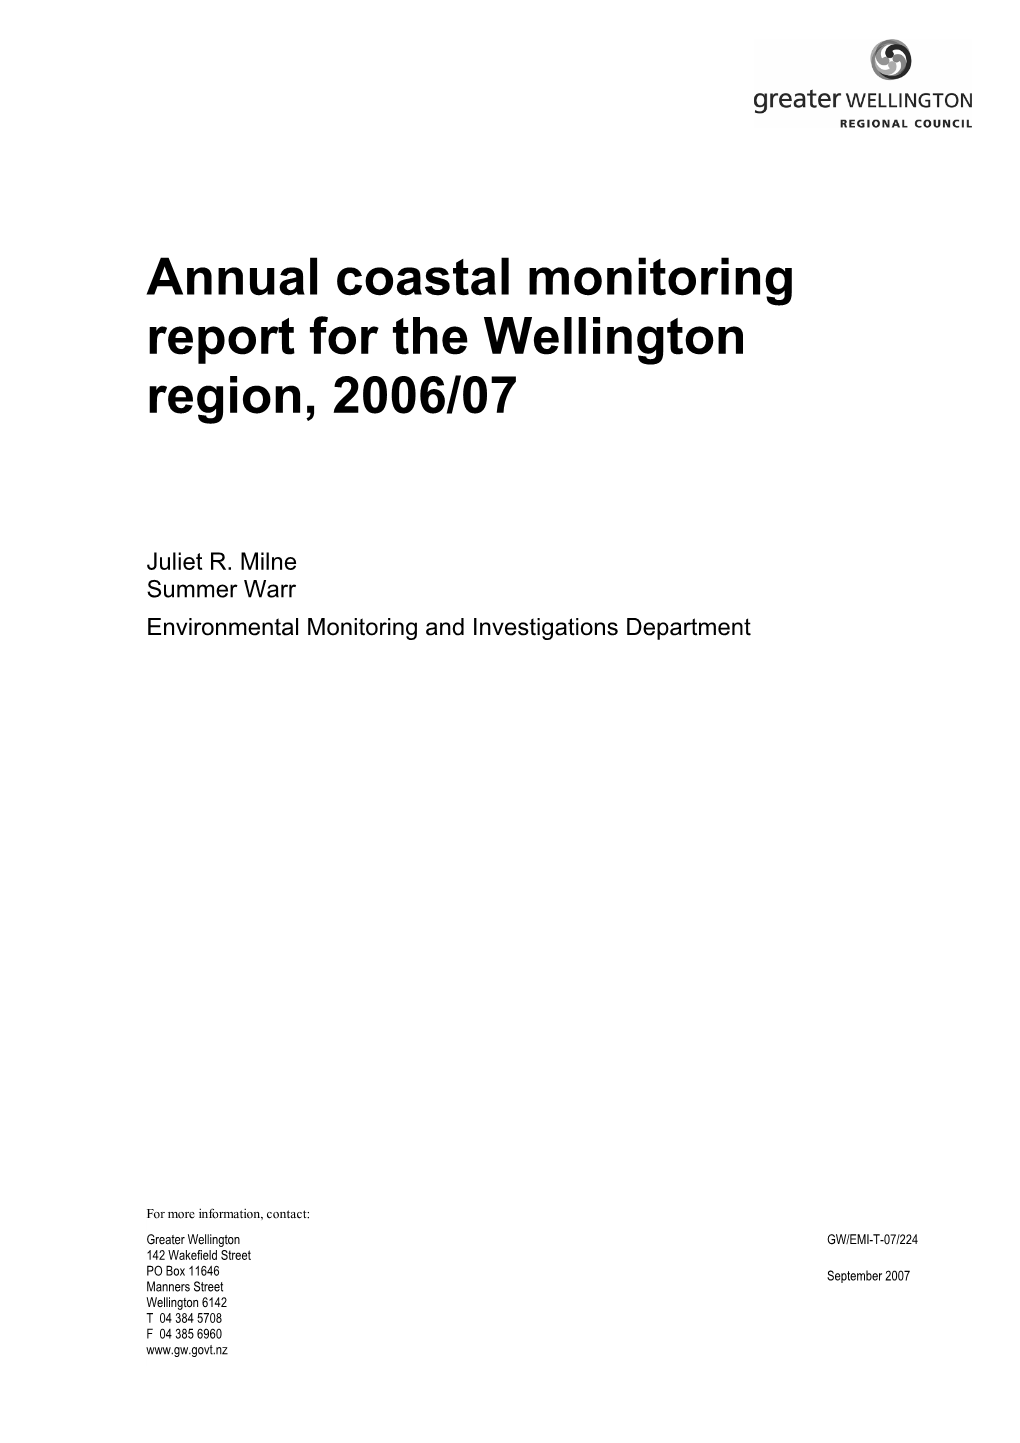 Annual Coastal Monitoring Report for the Wellington Region, 2006/07